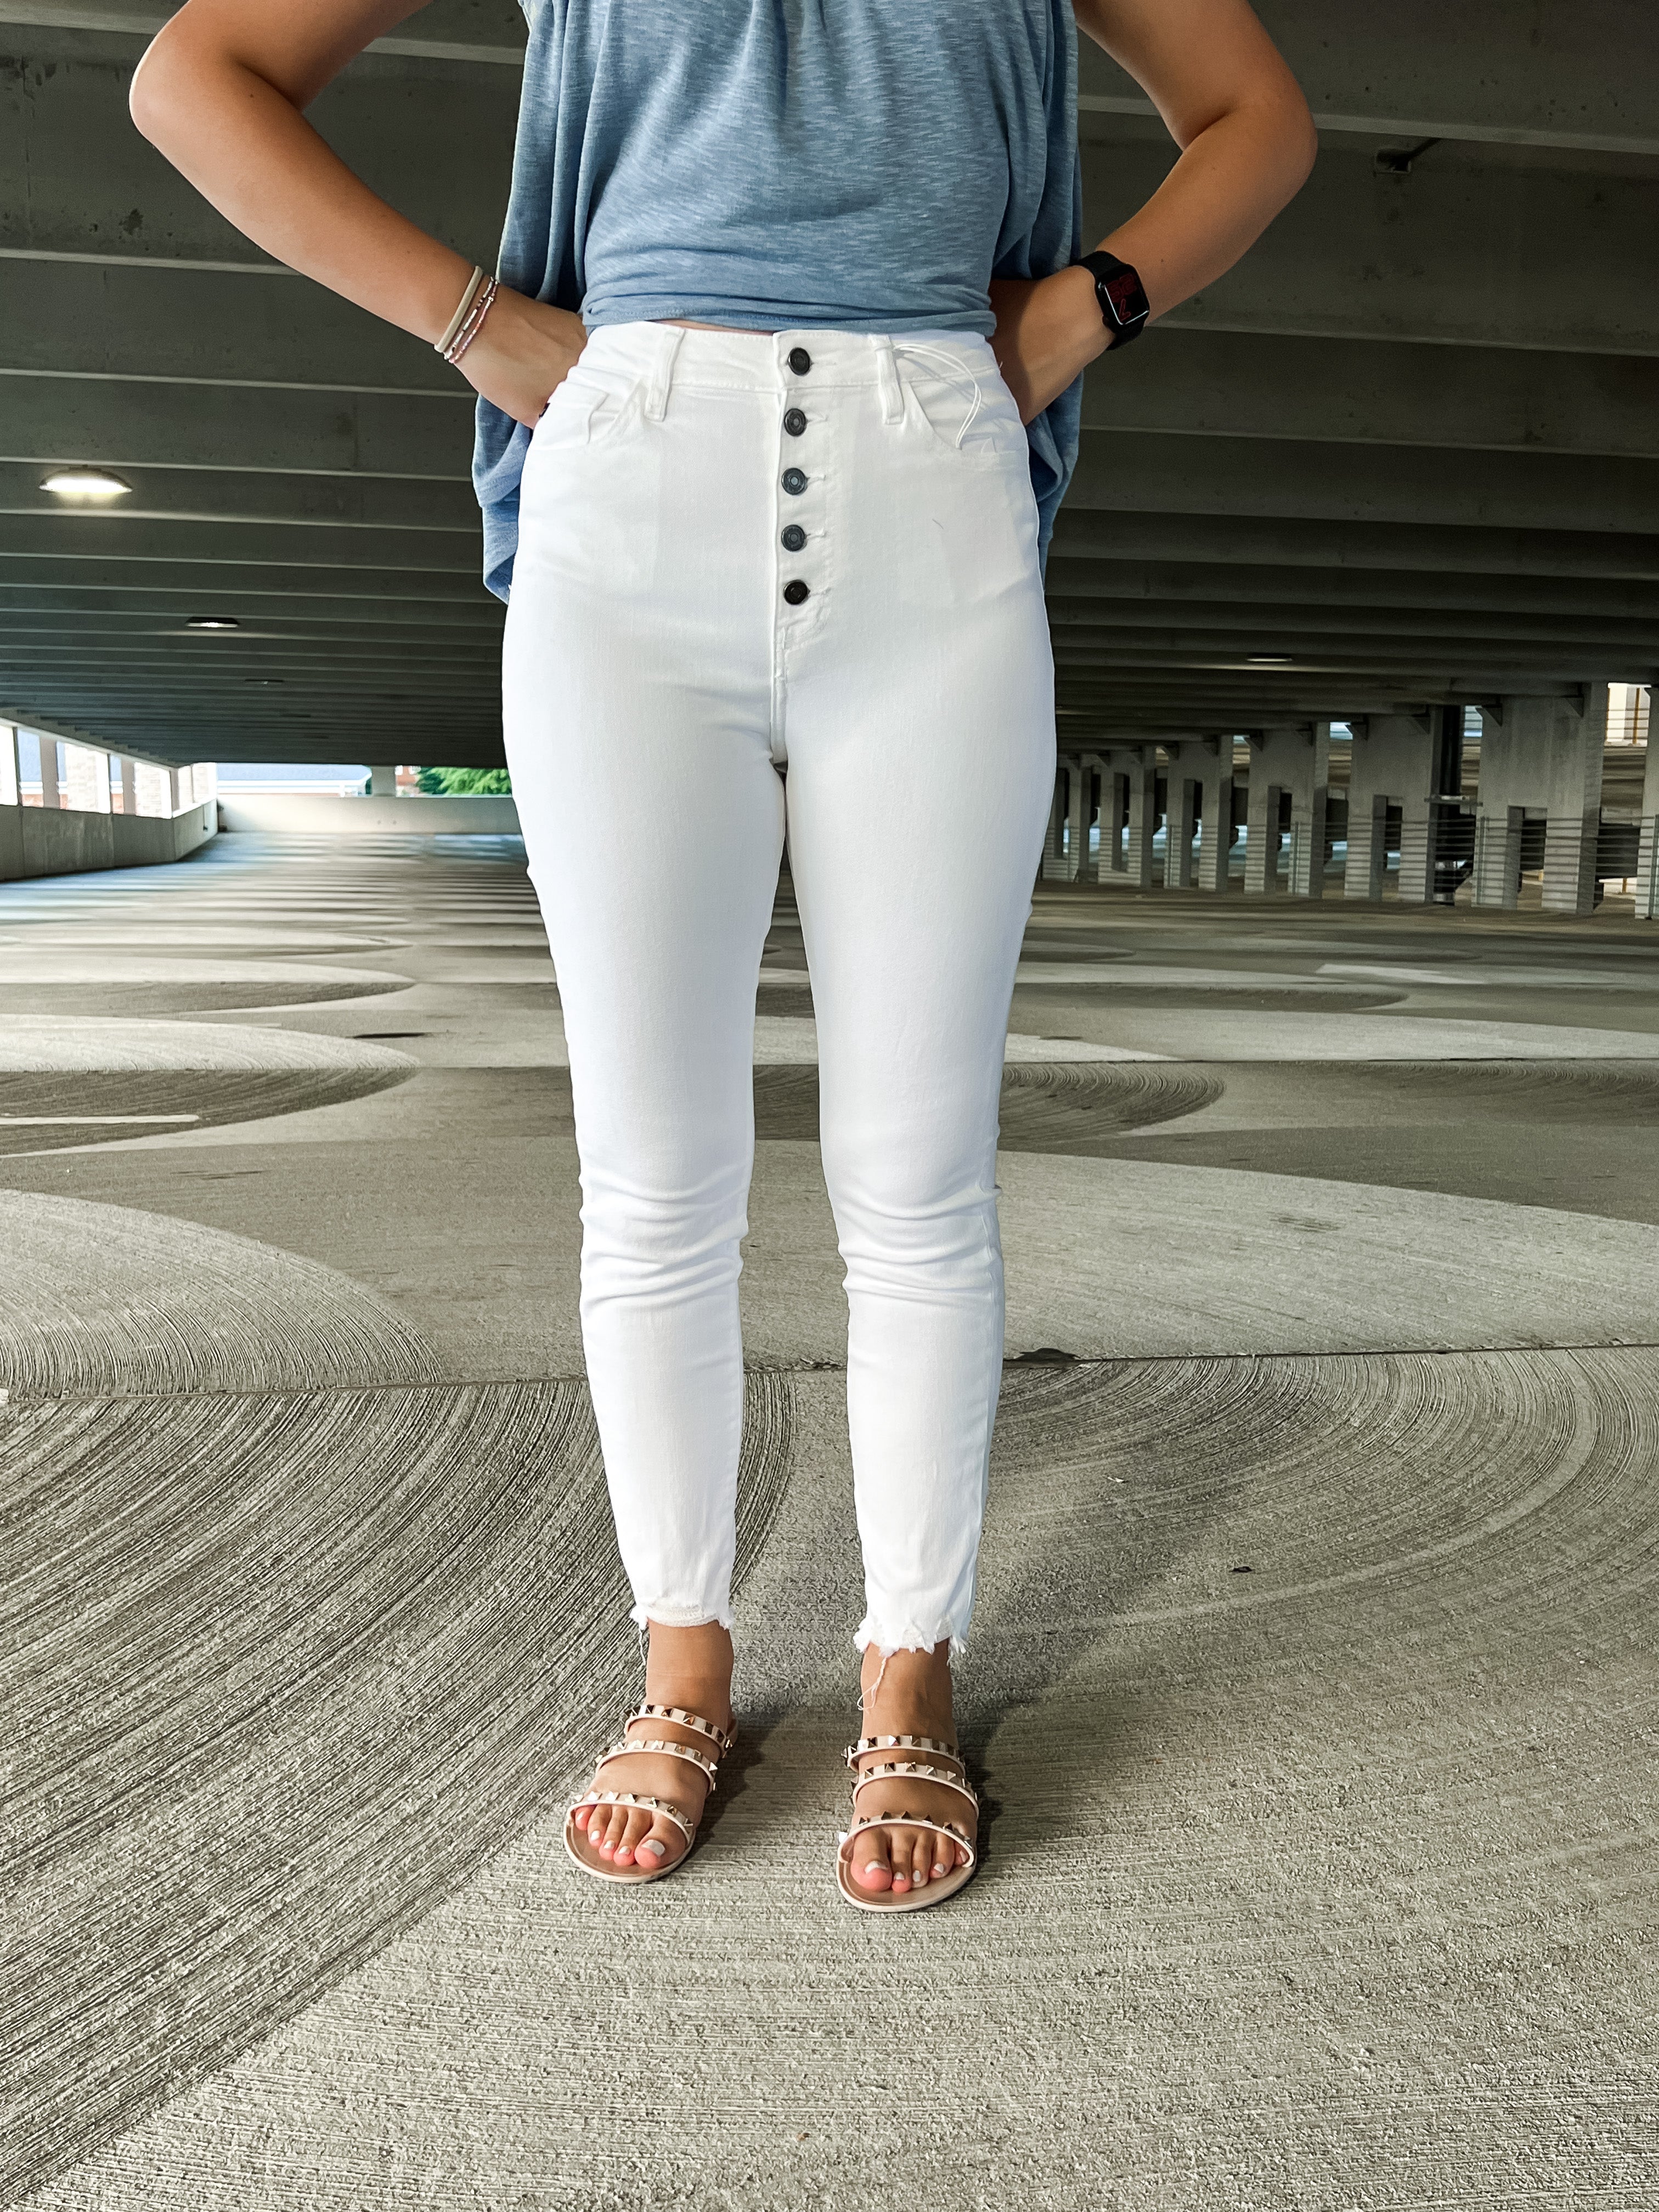 Assert Inleg ventilator White KanCan High Rise Jeans – Ashley Taylor Boutique